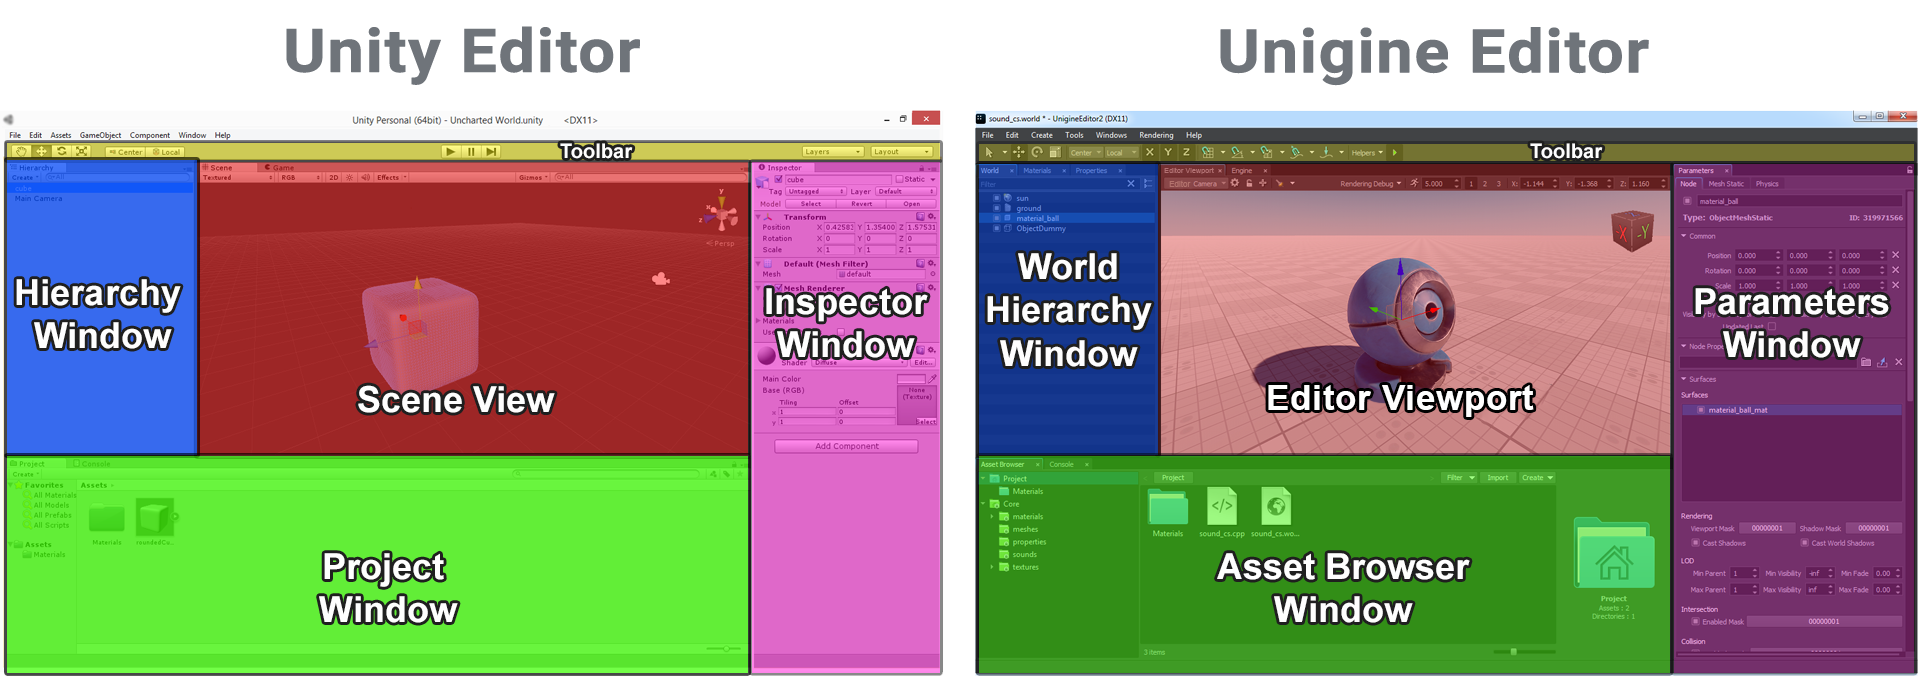 Unity and UNIGINE Editor UI Comparison (click to enlarge)